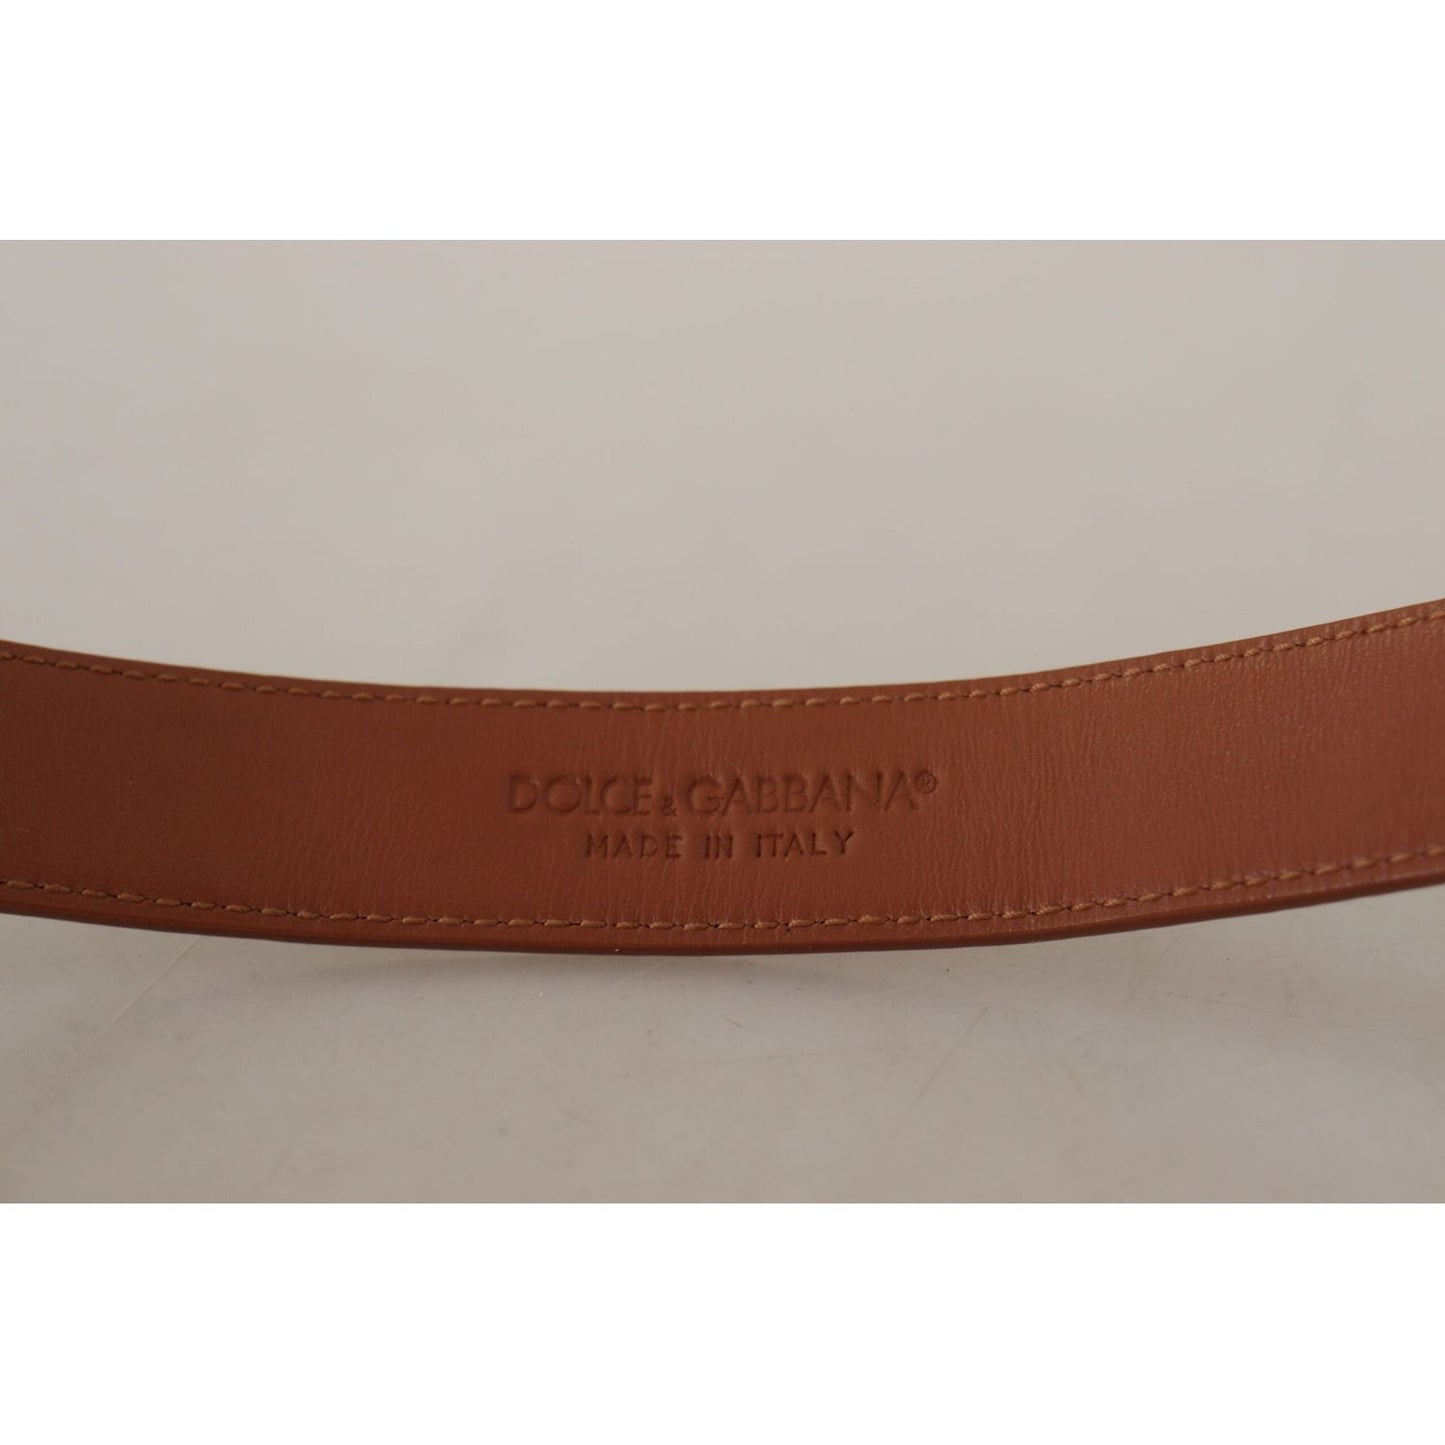 Dolce & Gabbana Elegant Leather Belt with Logo Buckle brown-leather-baroque-gold-dg-logo-waist-buckle-belt IMG_8929-scaled-eca2c361-591.jpg